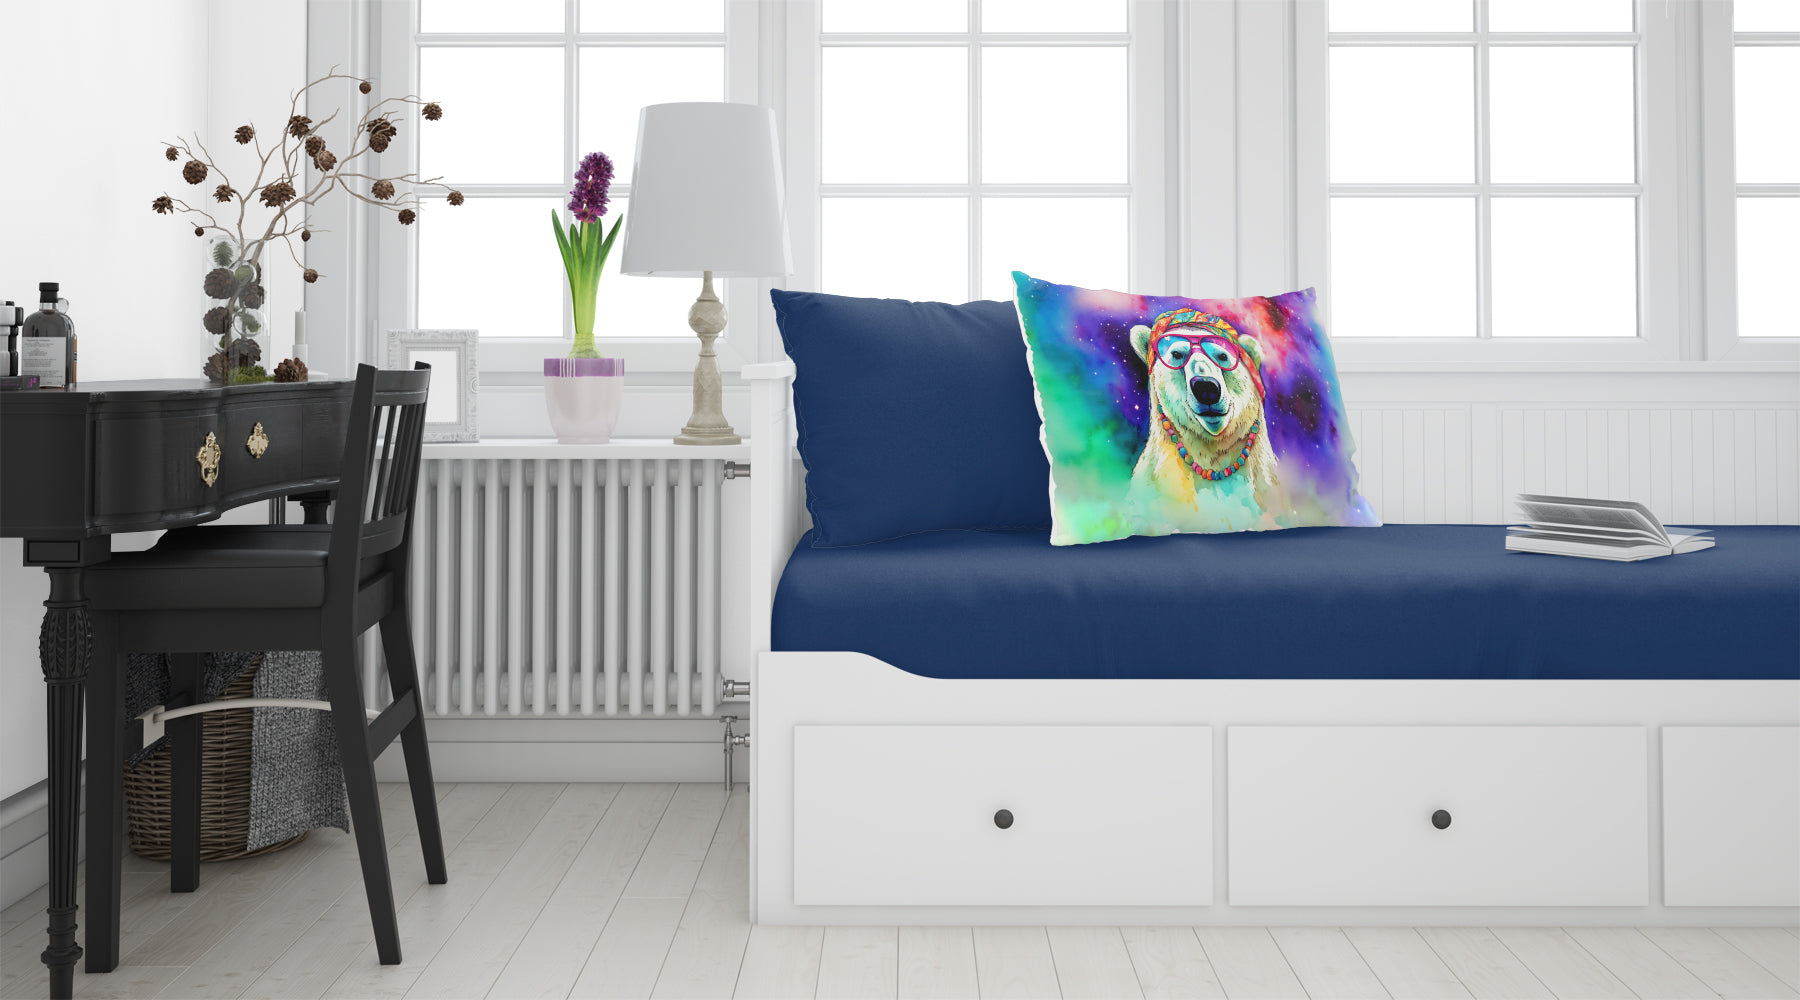 Buy this Hippie Animal Polar Bear Standard Pillowcase